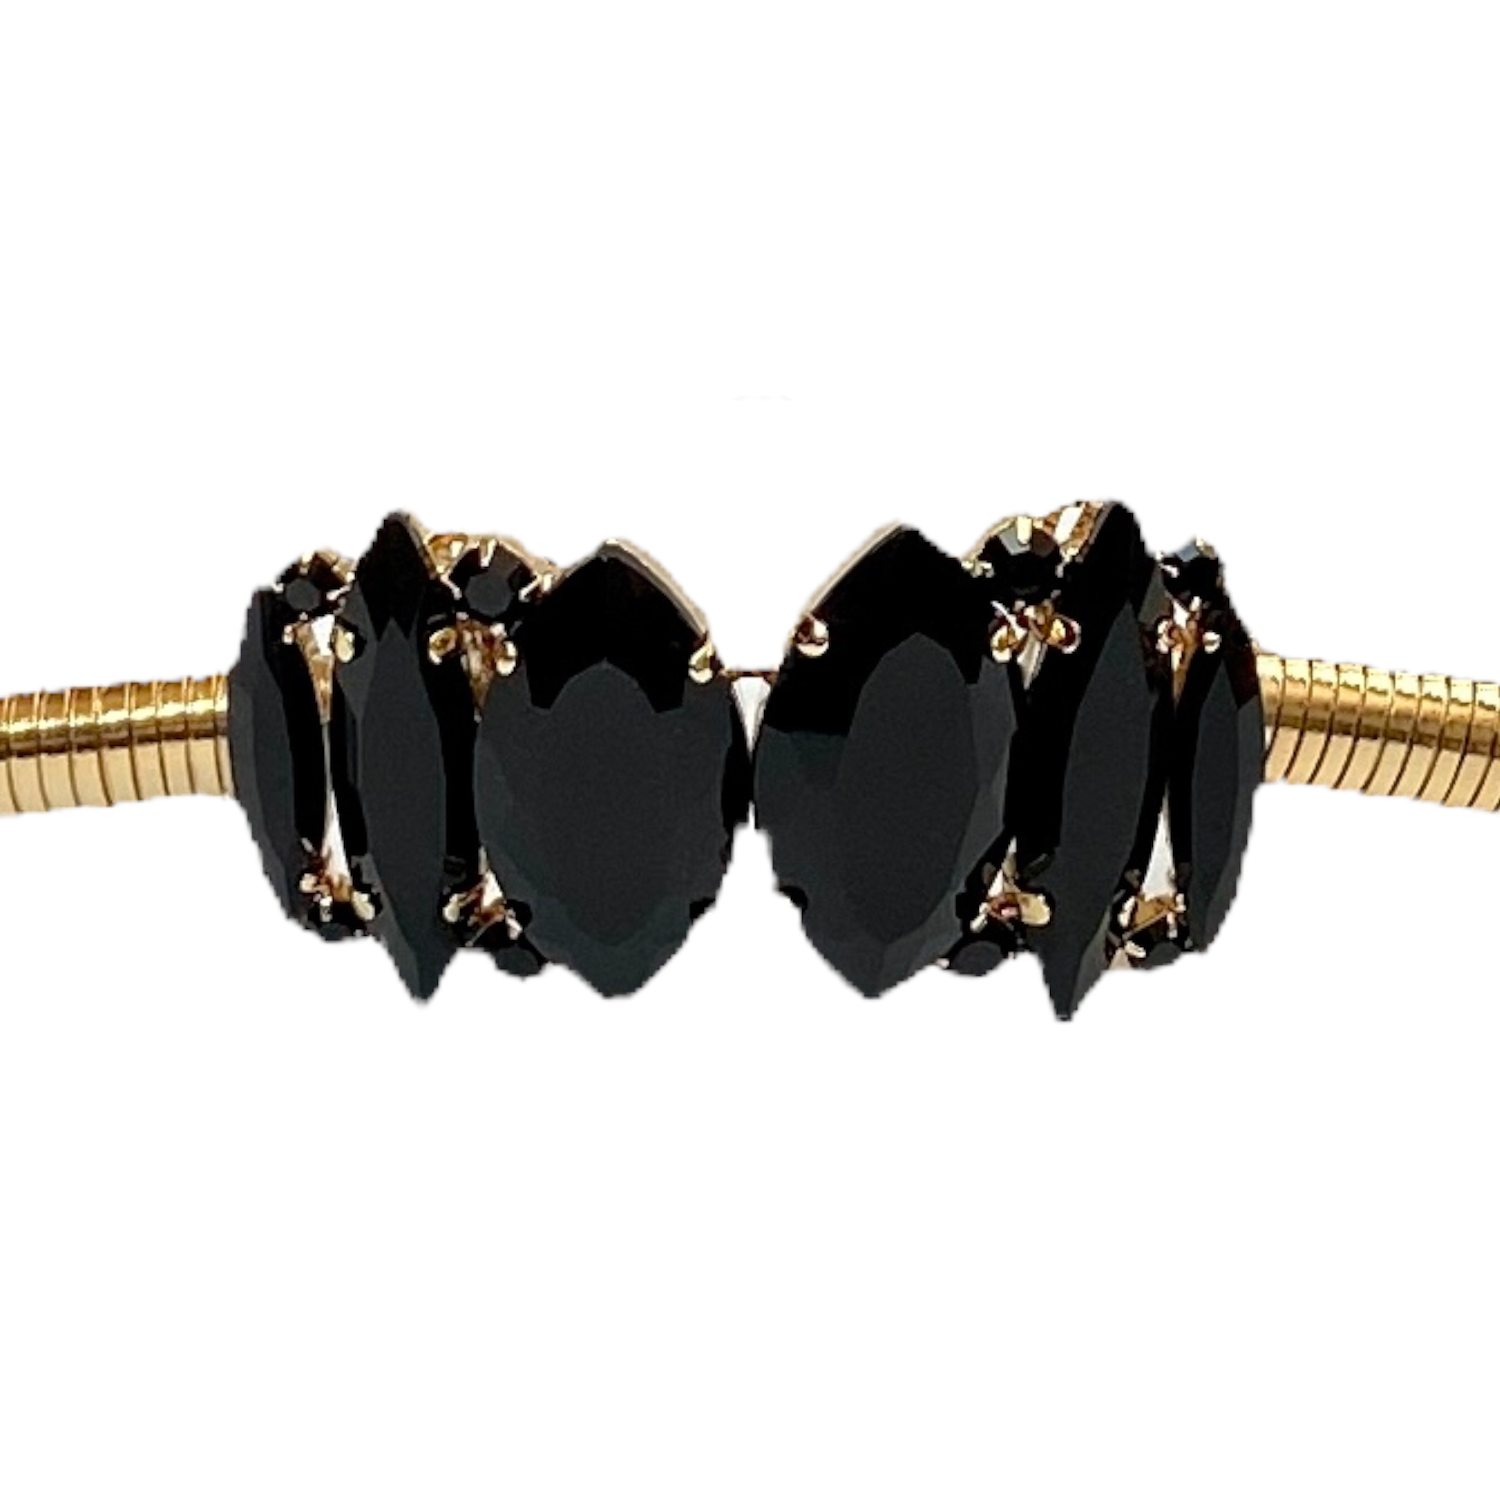 Matilde belt with jewel buckle in black crystals